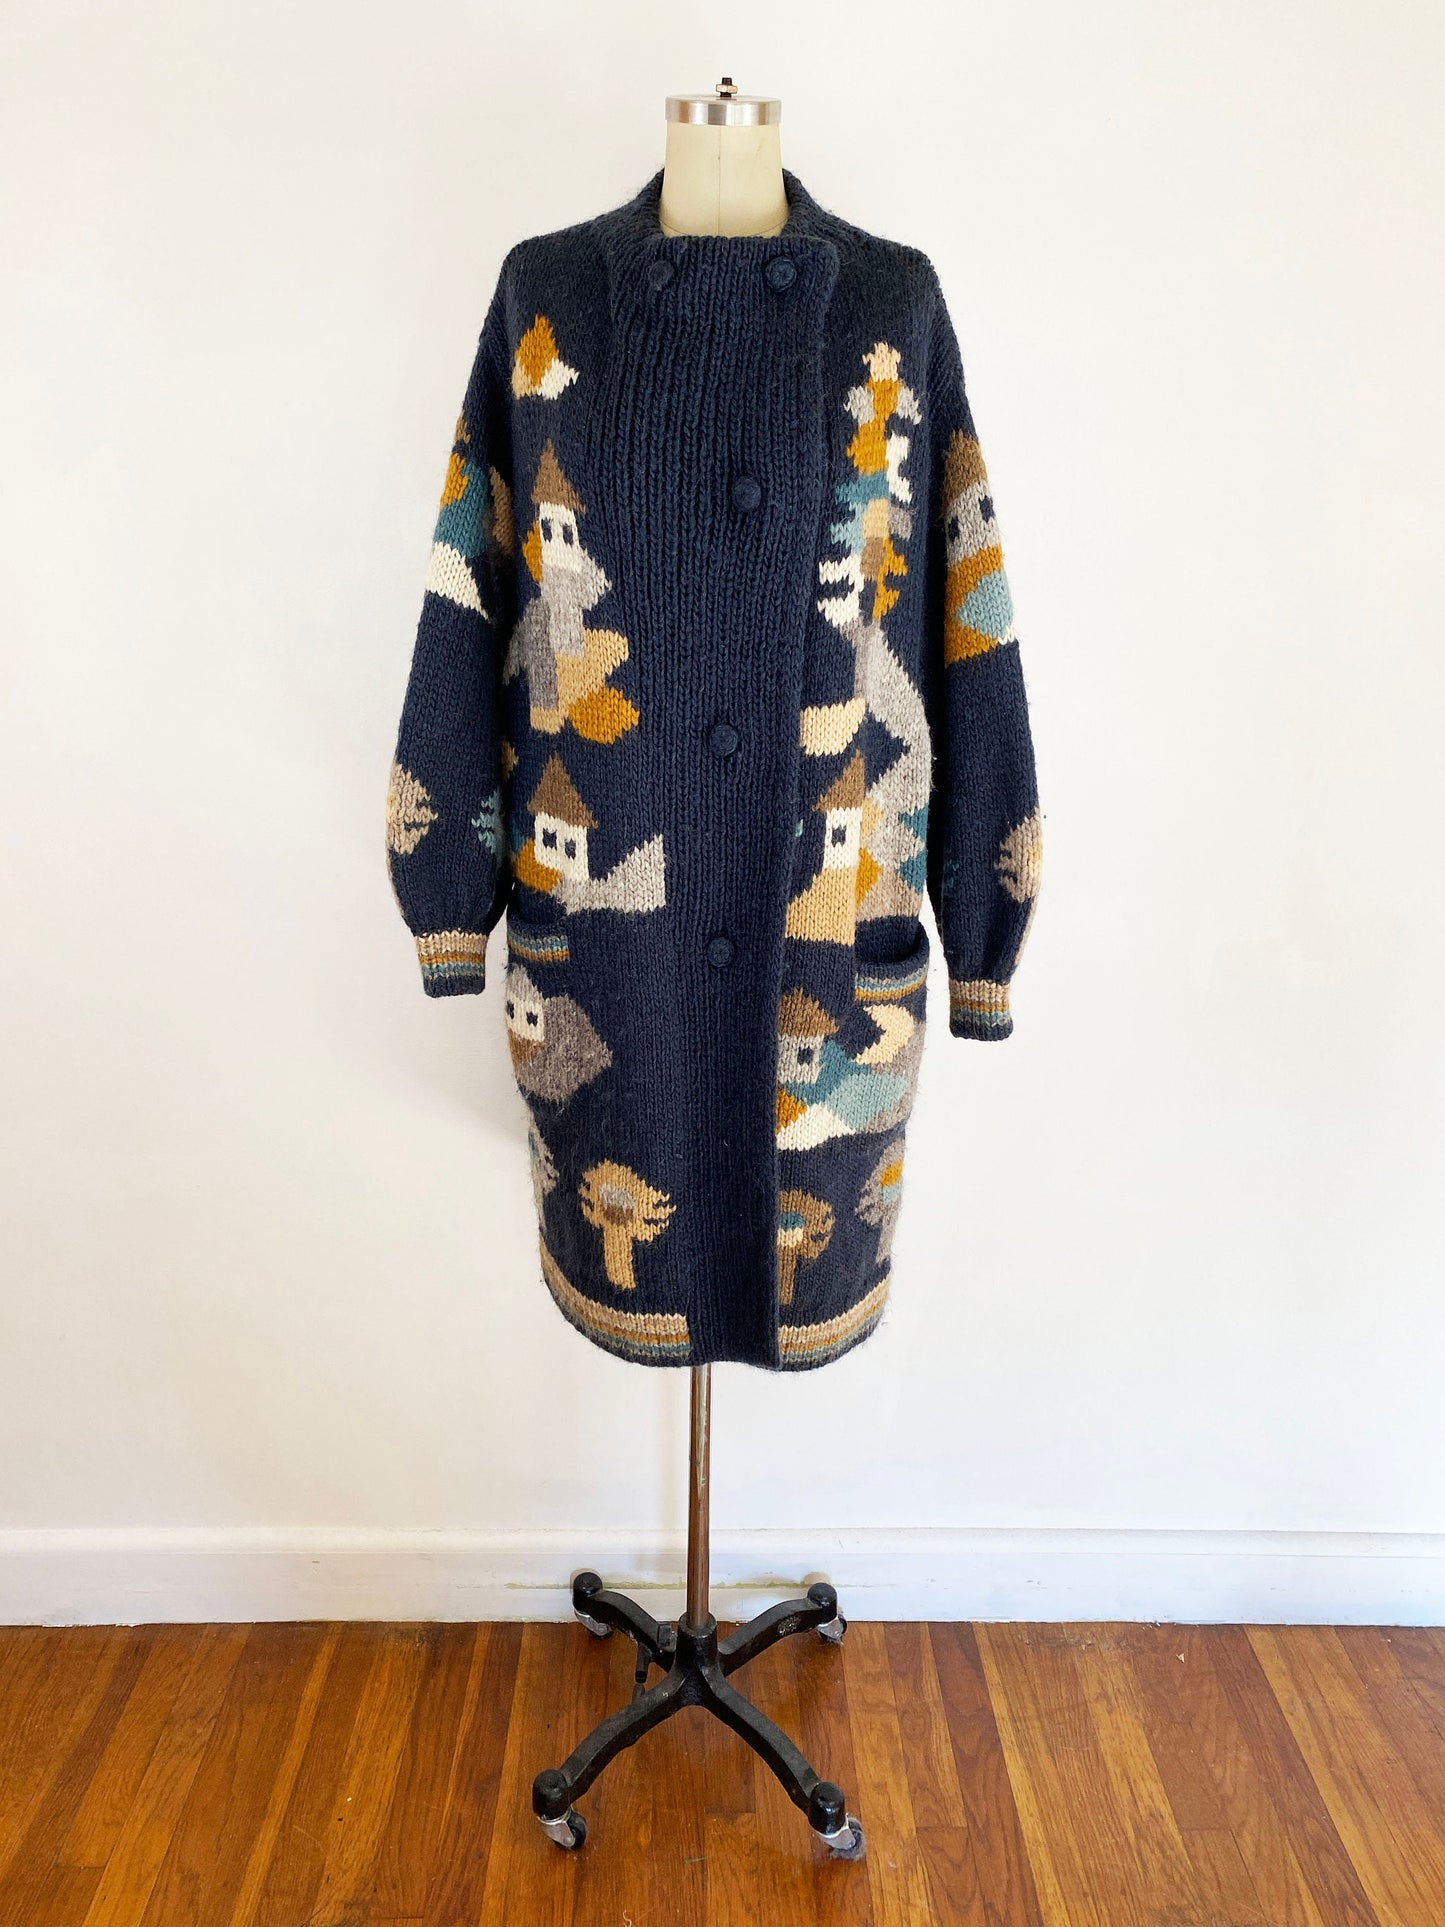 1980s Intarsia Landscape Wool Long Cardigan House Pattern Sirogojno Sweater Dobrila Wool Jacket Folk Chunky Sweater / Size Extra Large XL